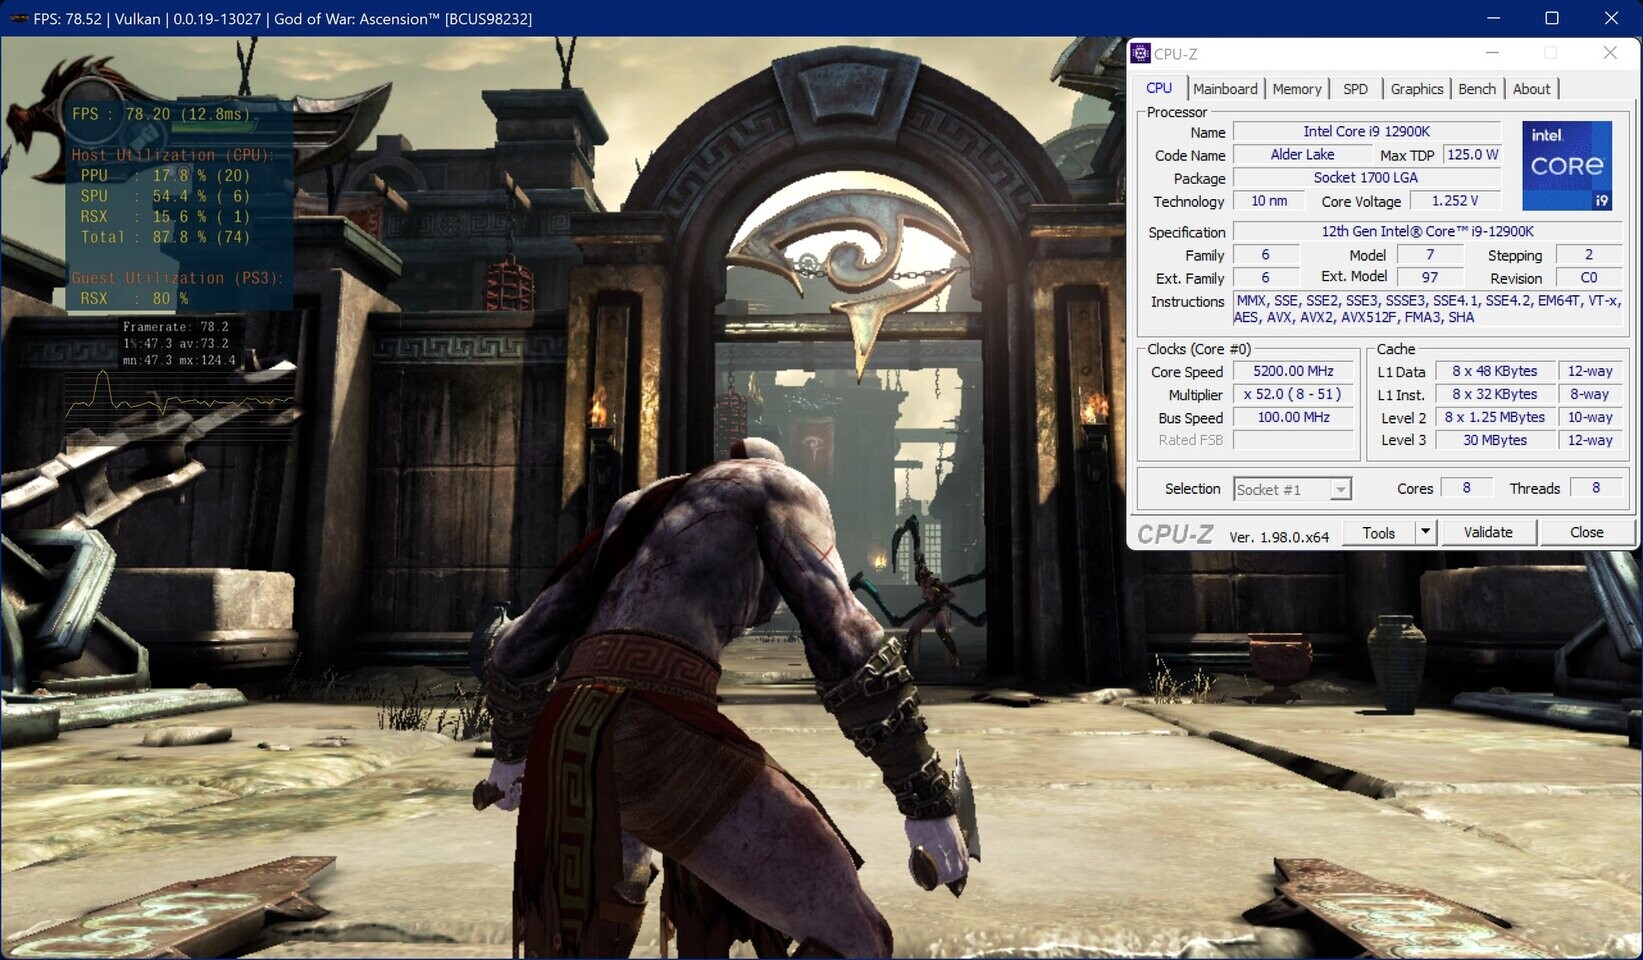 The Last Of Us 4K RPCS3 PS3 Emulator, RTX 3090 Ti